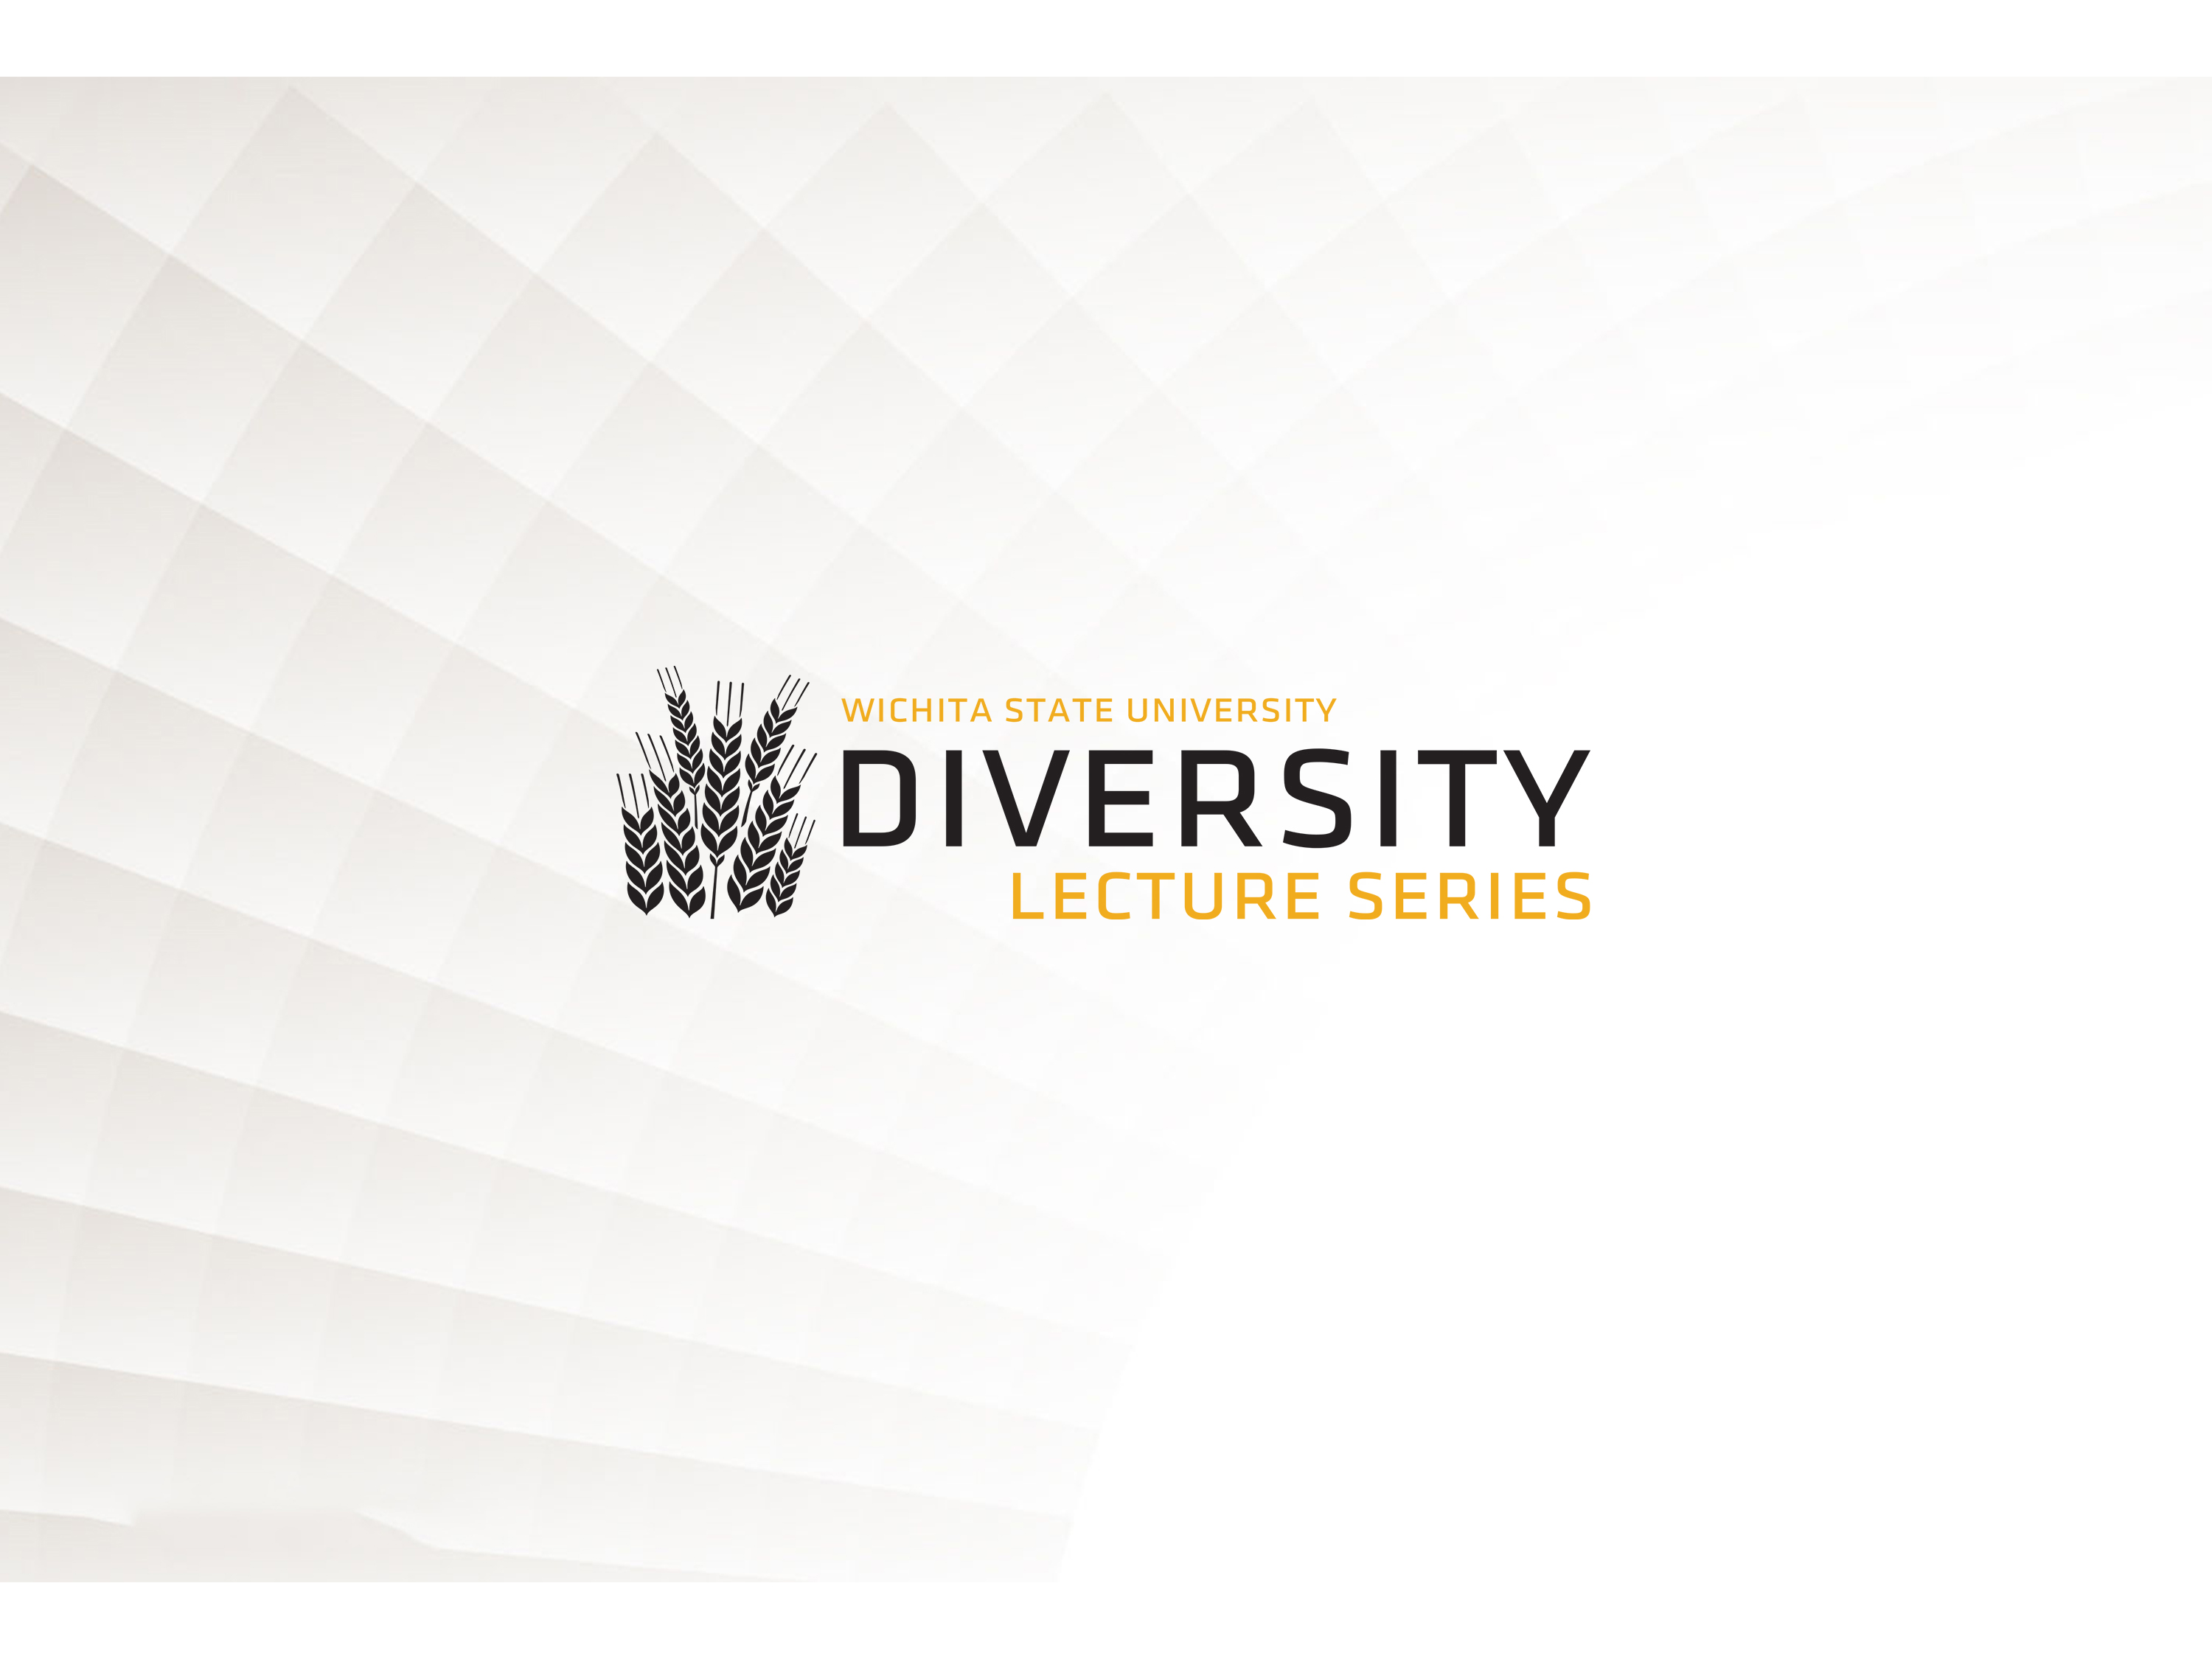 Wichita State University - Diversity Lecture Series